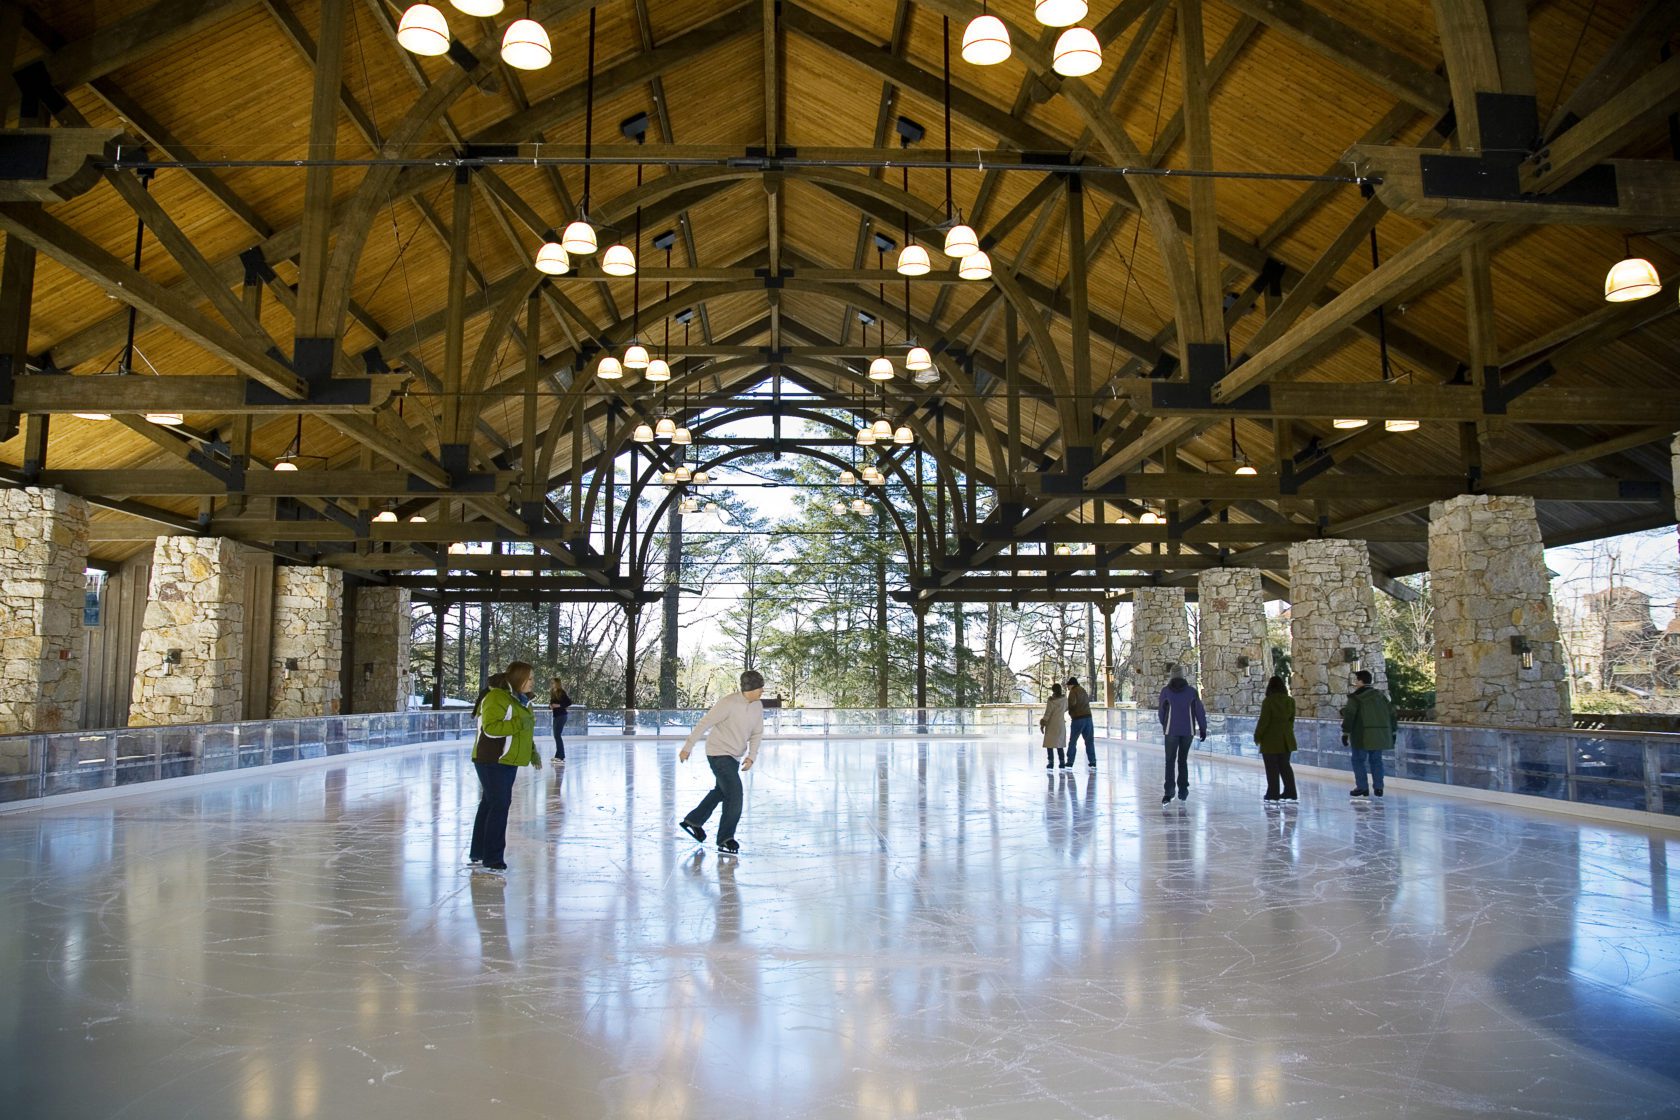 Ice Skating Pavilion